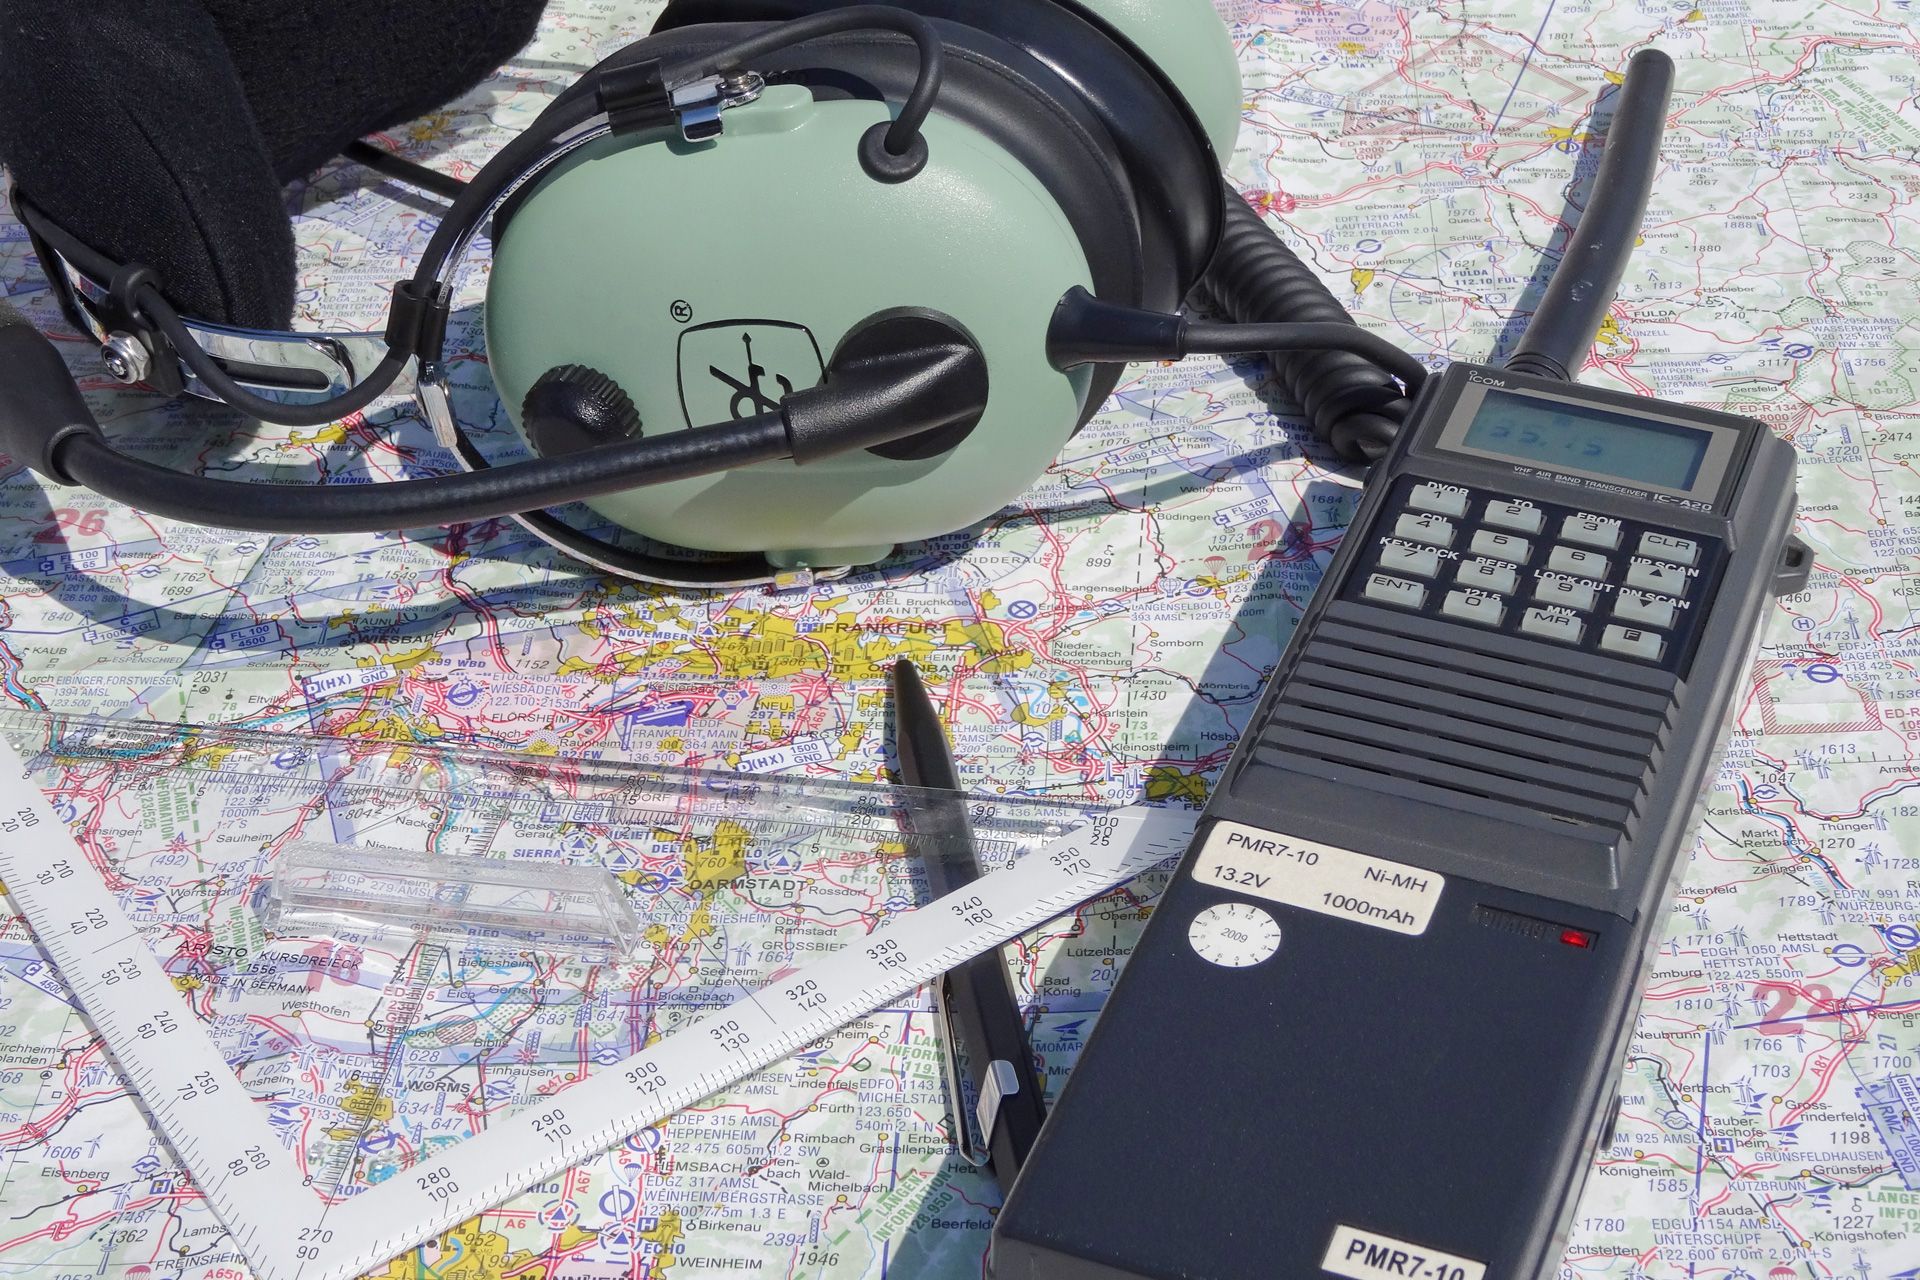 Navigation equipment for flights